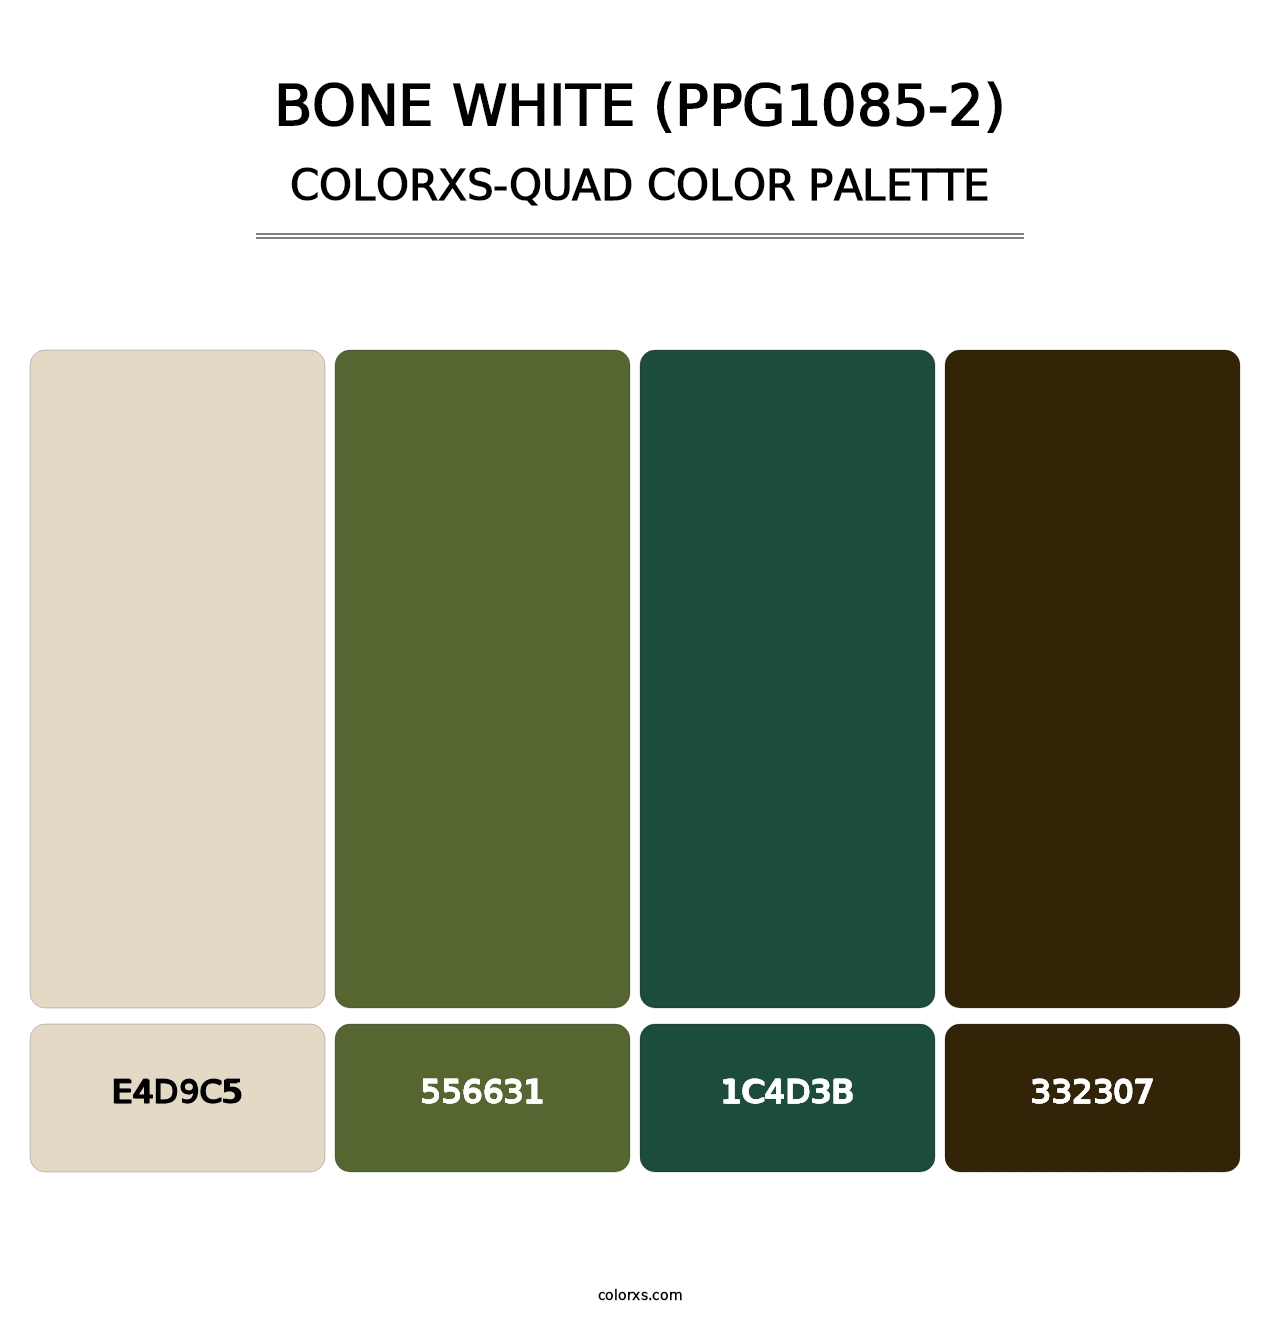 Bone White (PPG1085-2) - Colorxs Quad Palette